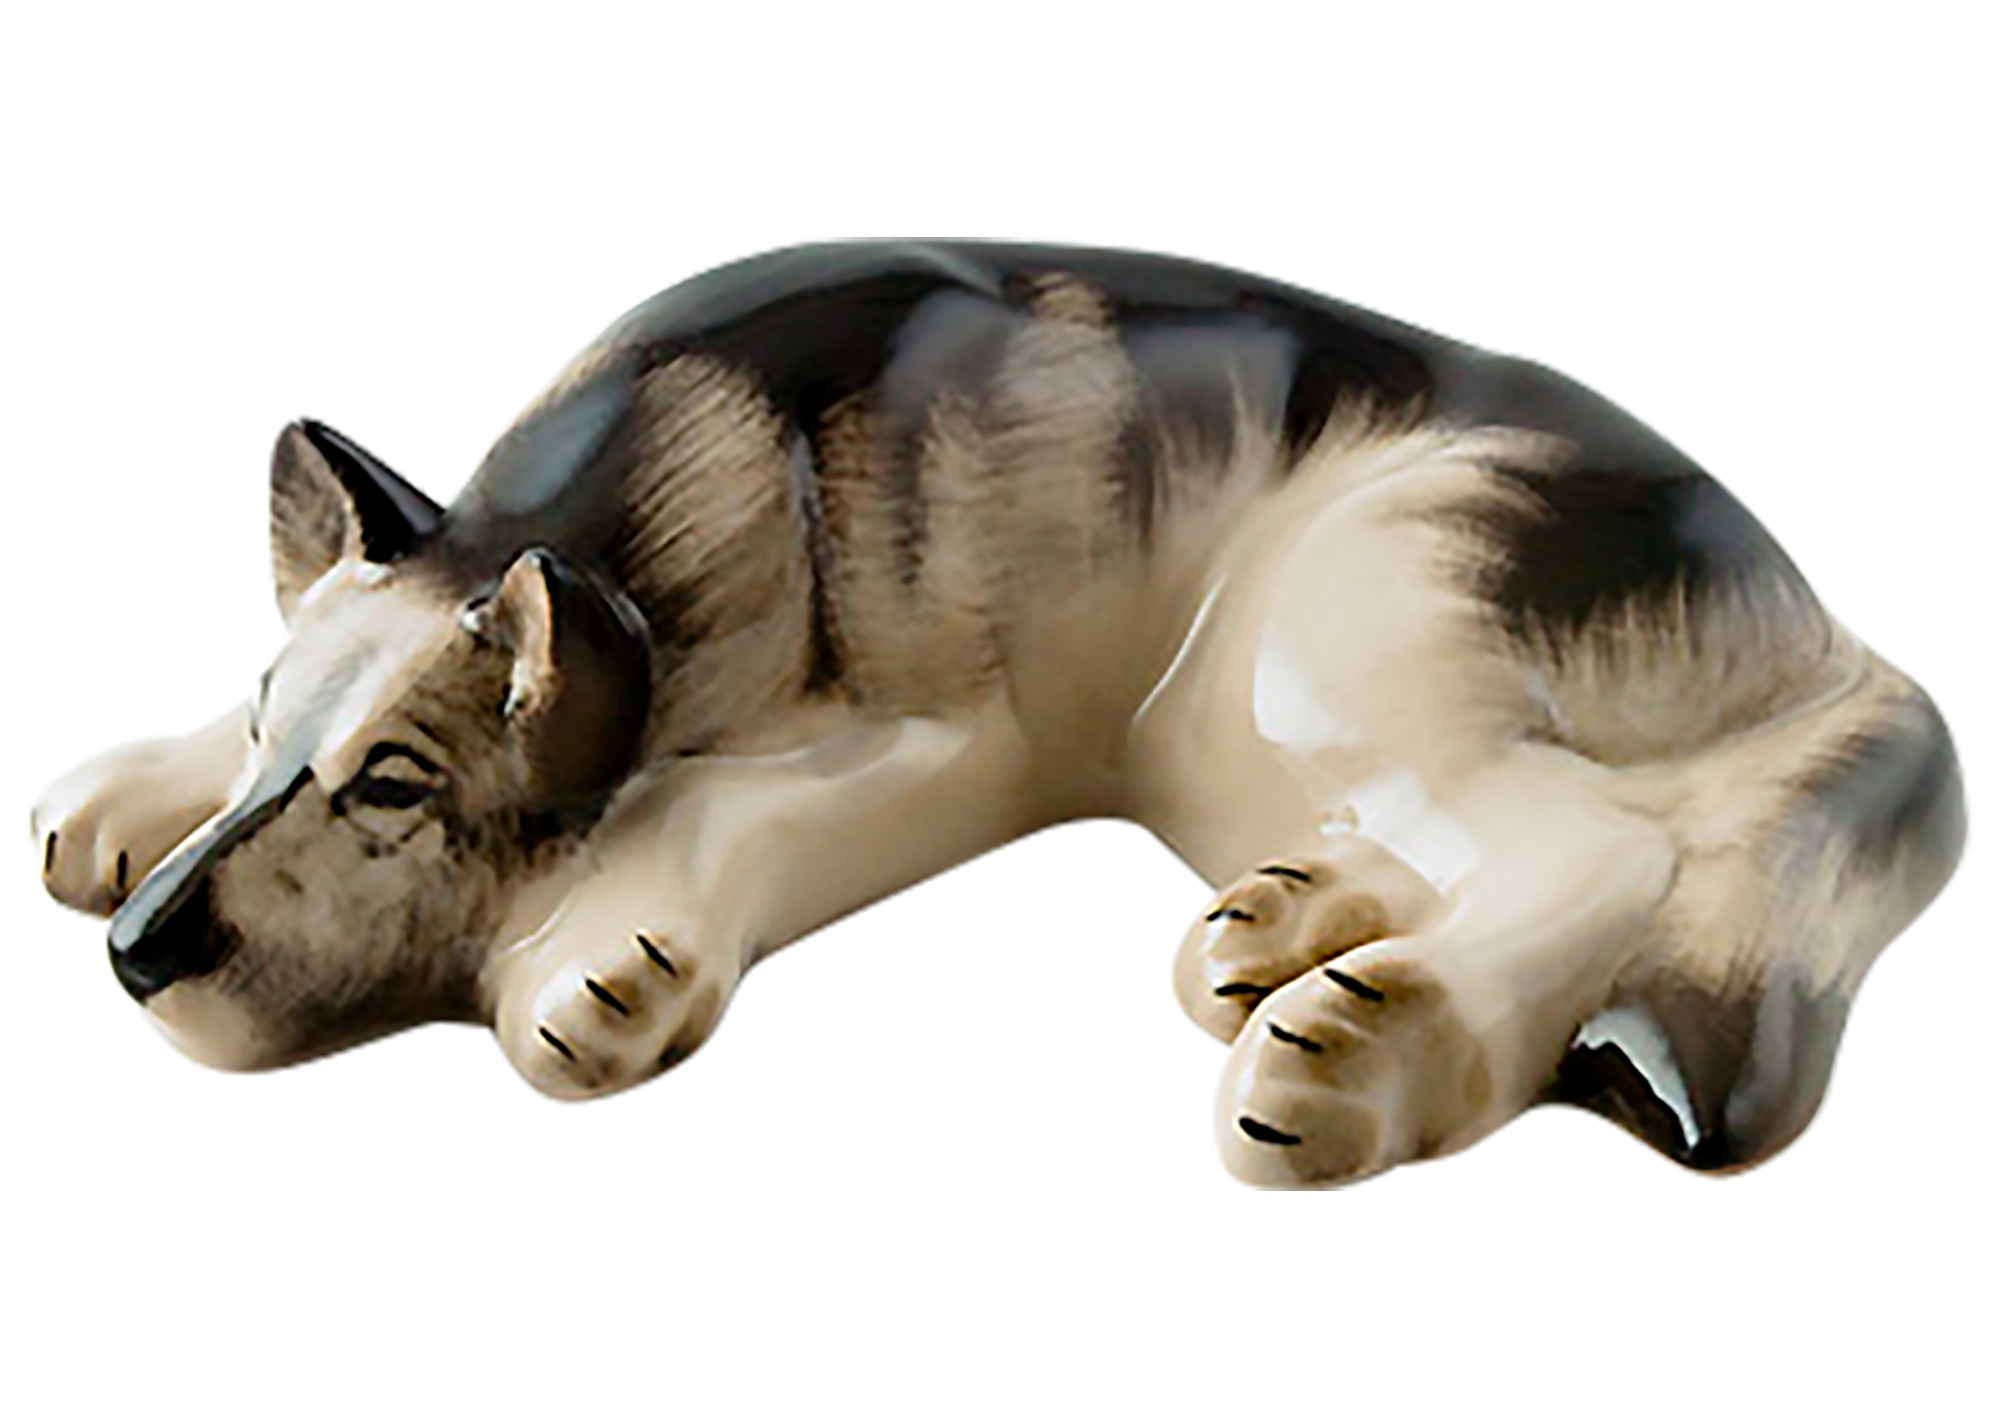 Buy German Shepherd Figurine at GoldenCockerel.com